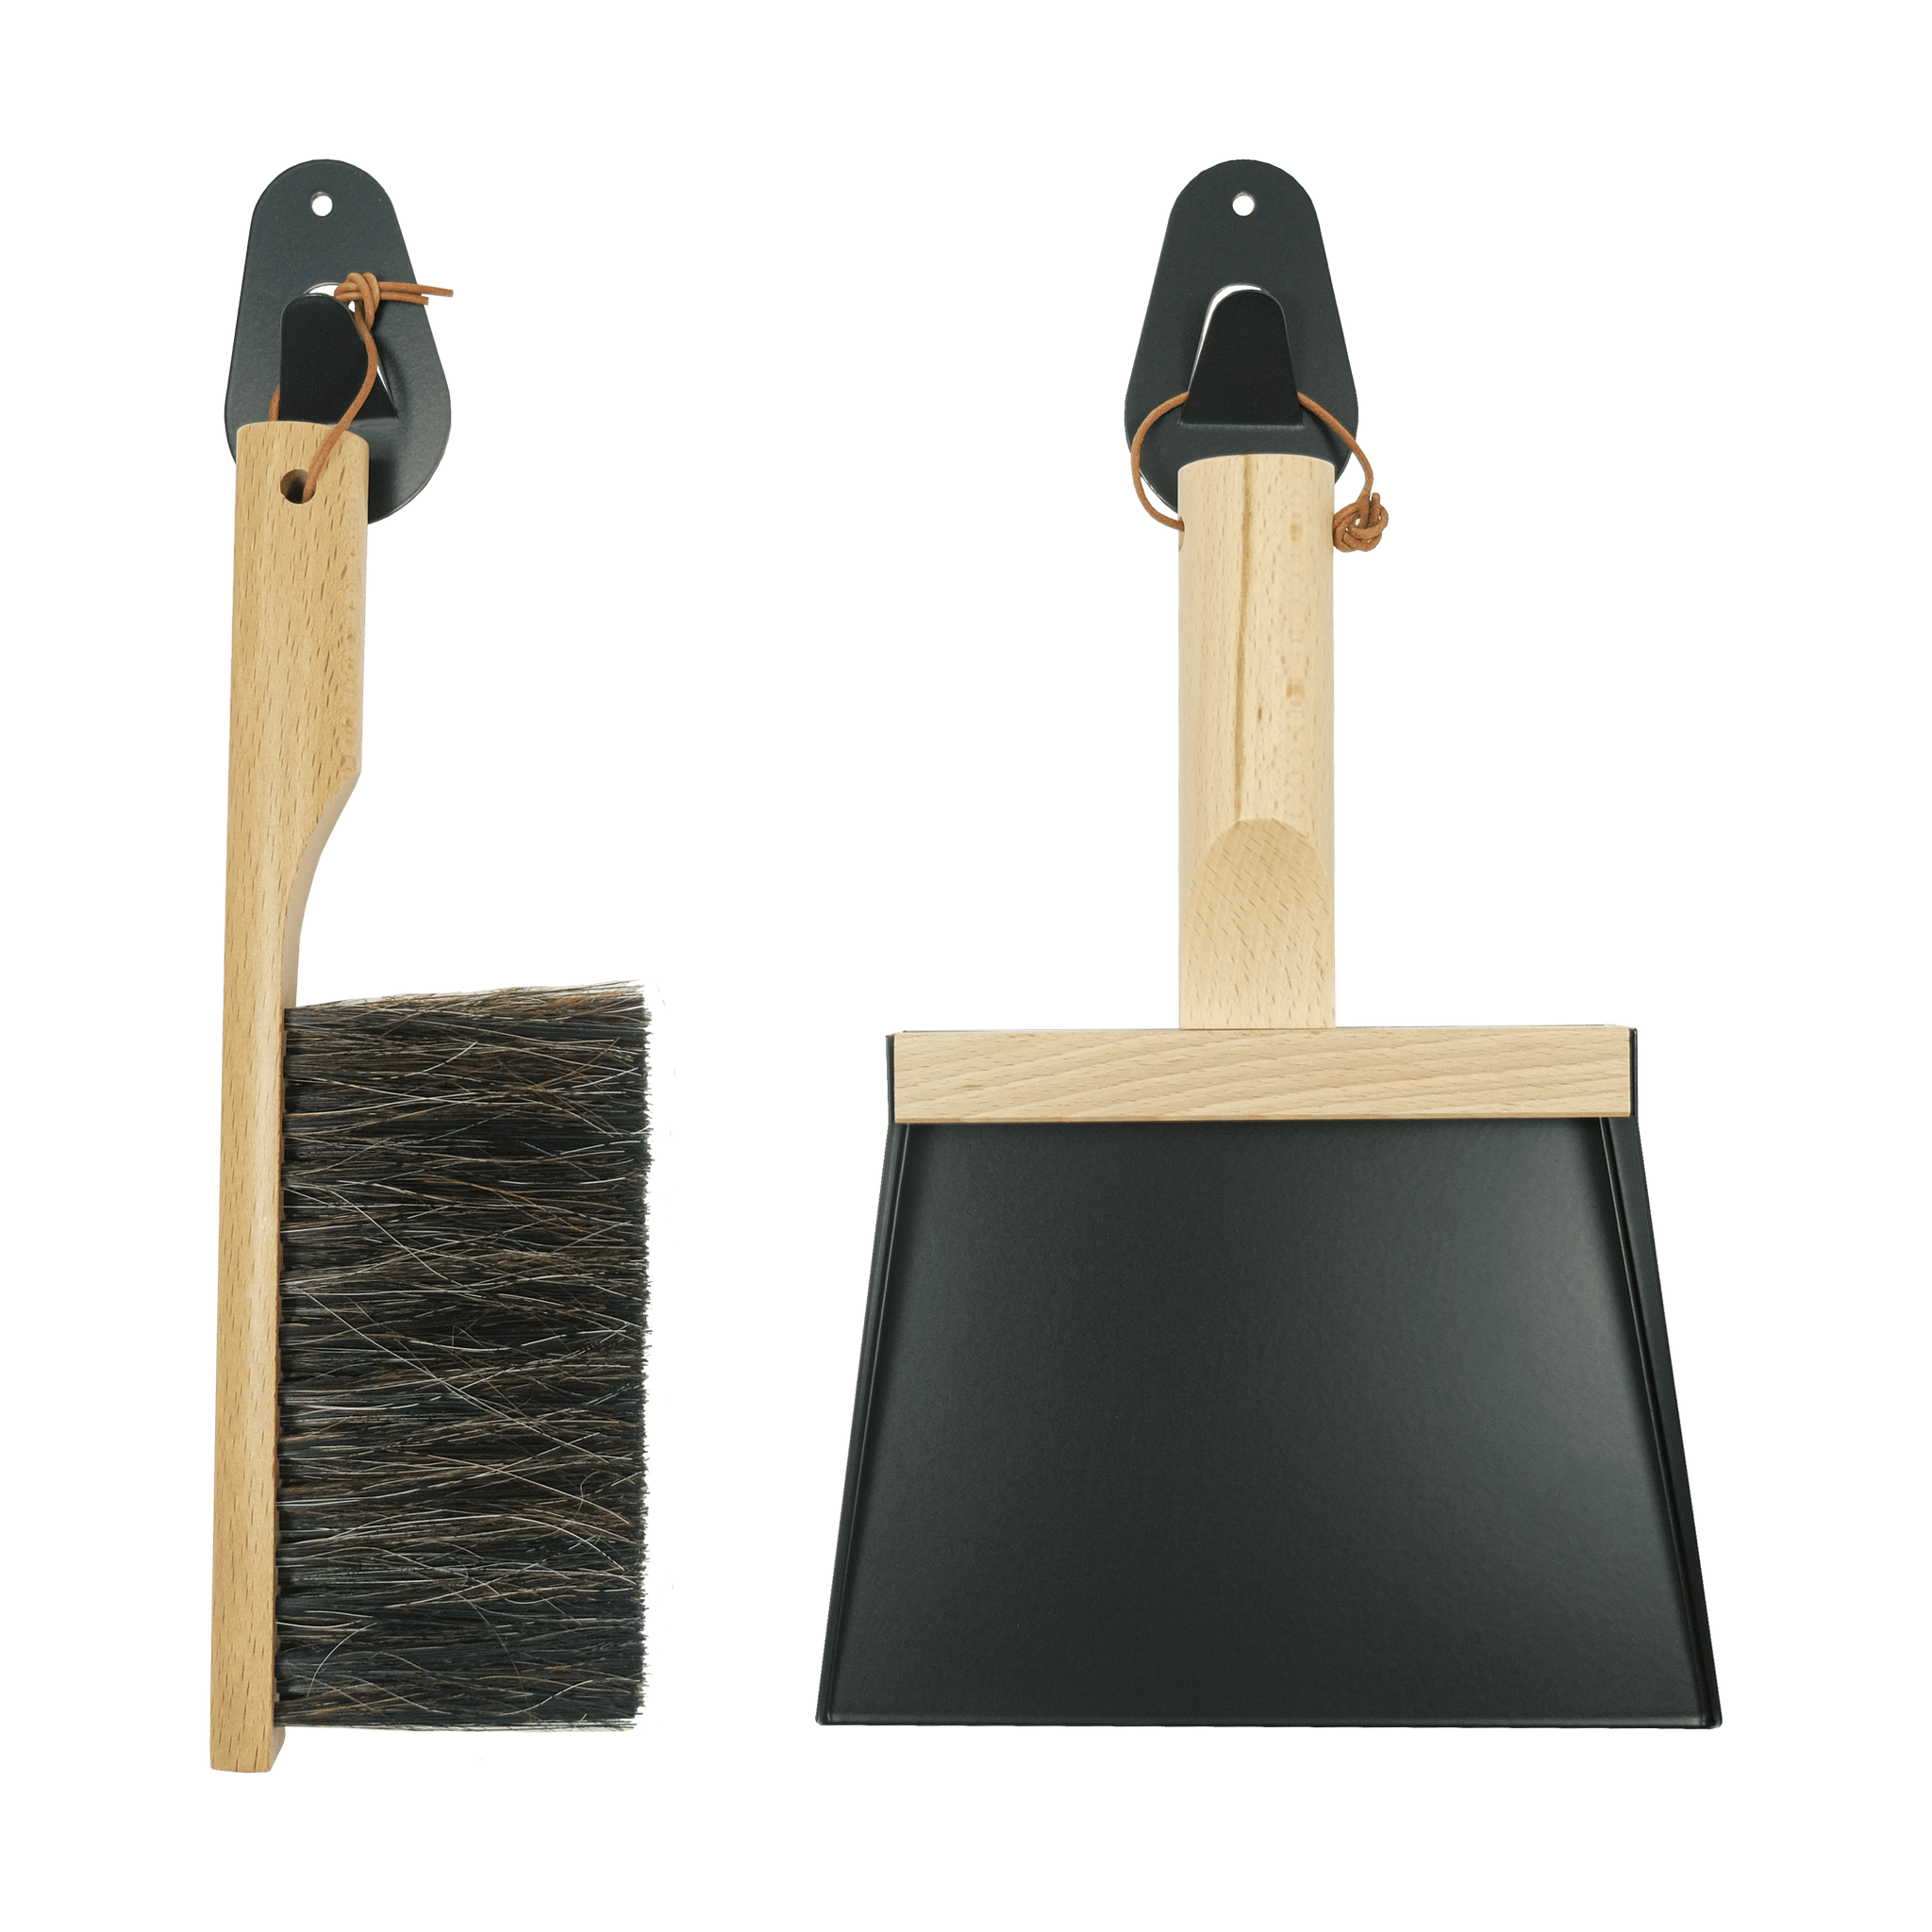 Andrée Jardin Mr. and Mrs. Clynk Black Dustpan & Brush "Coffret" Gift Set with Wall Hooks